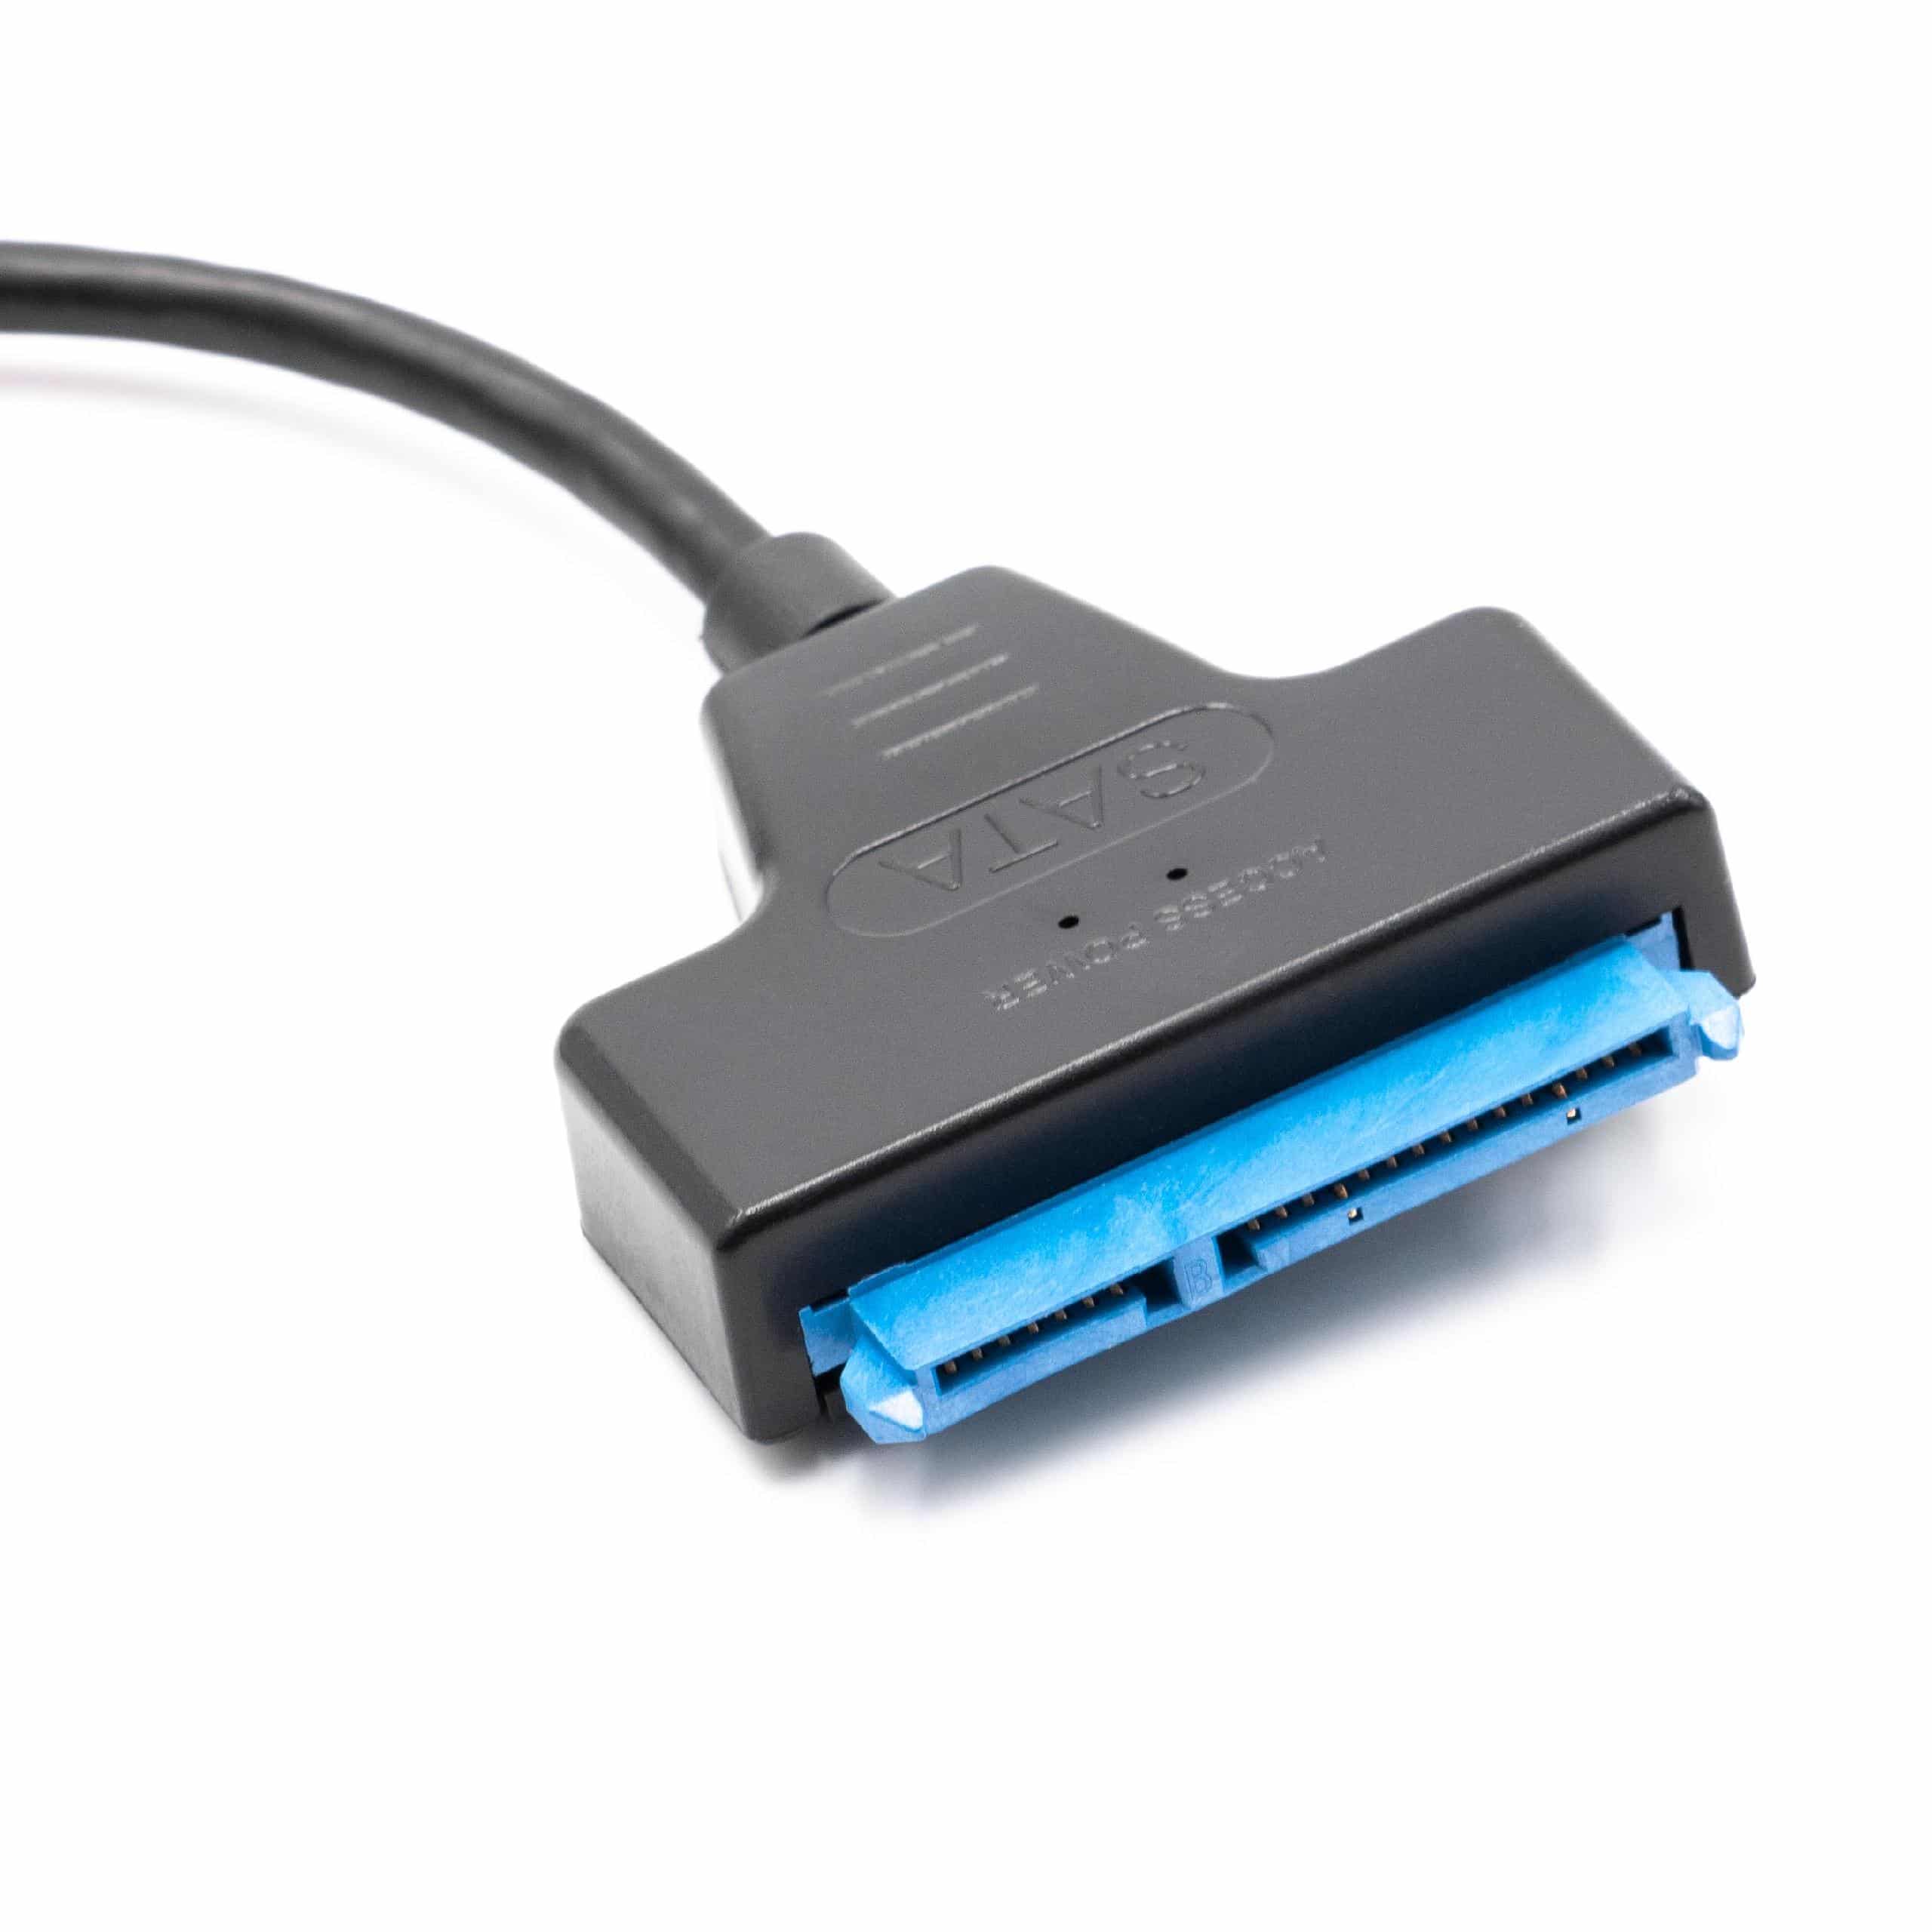 SATA III vers USB 3.0 Câble de raccordement pour disque dur HDD, SSD Plug & Play noir / bleu